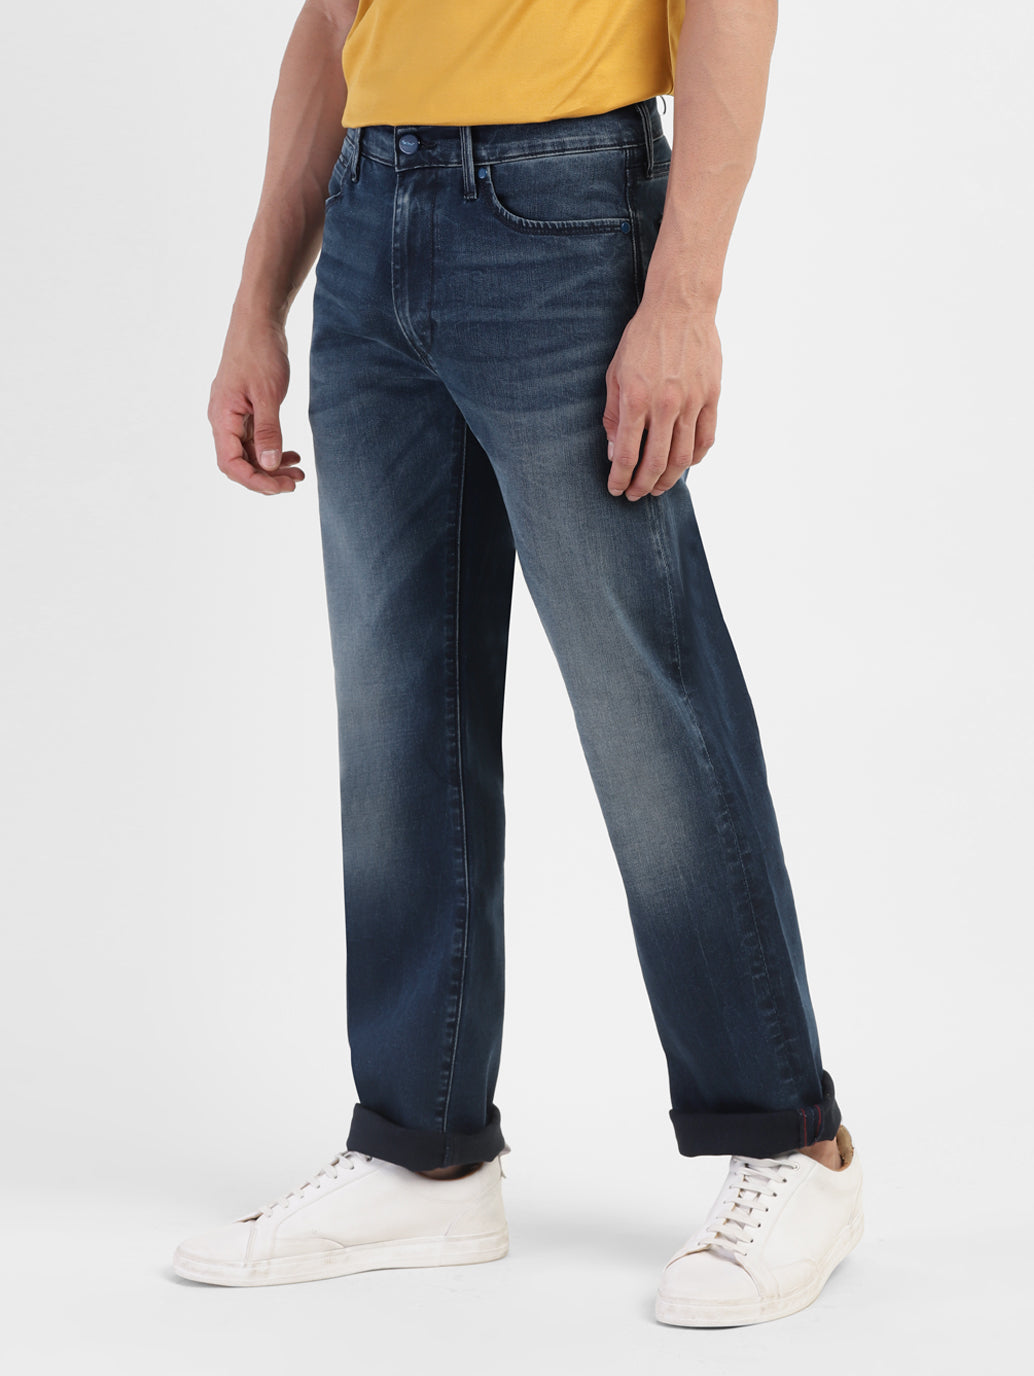 Men's 513 Slim Straight Fit Jeans